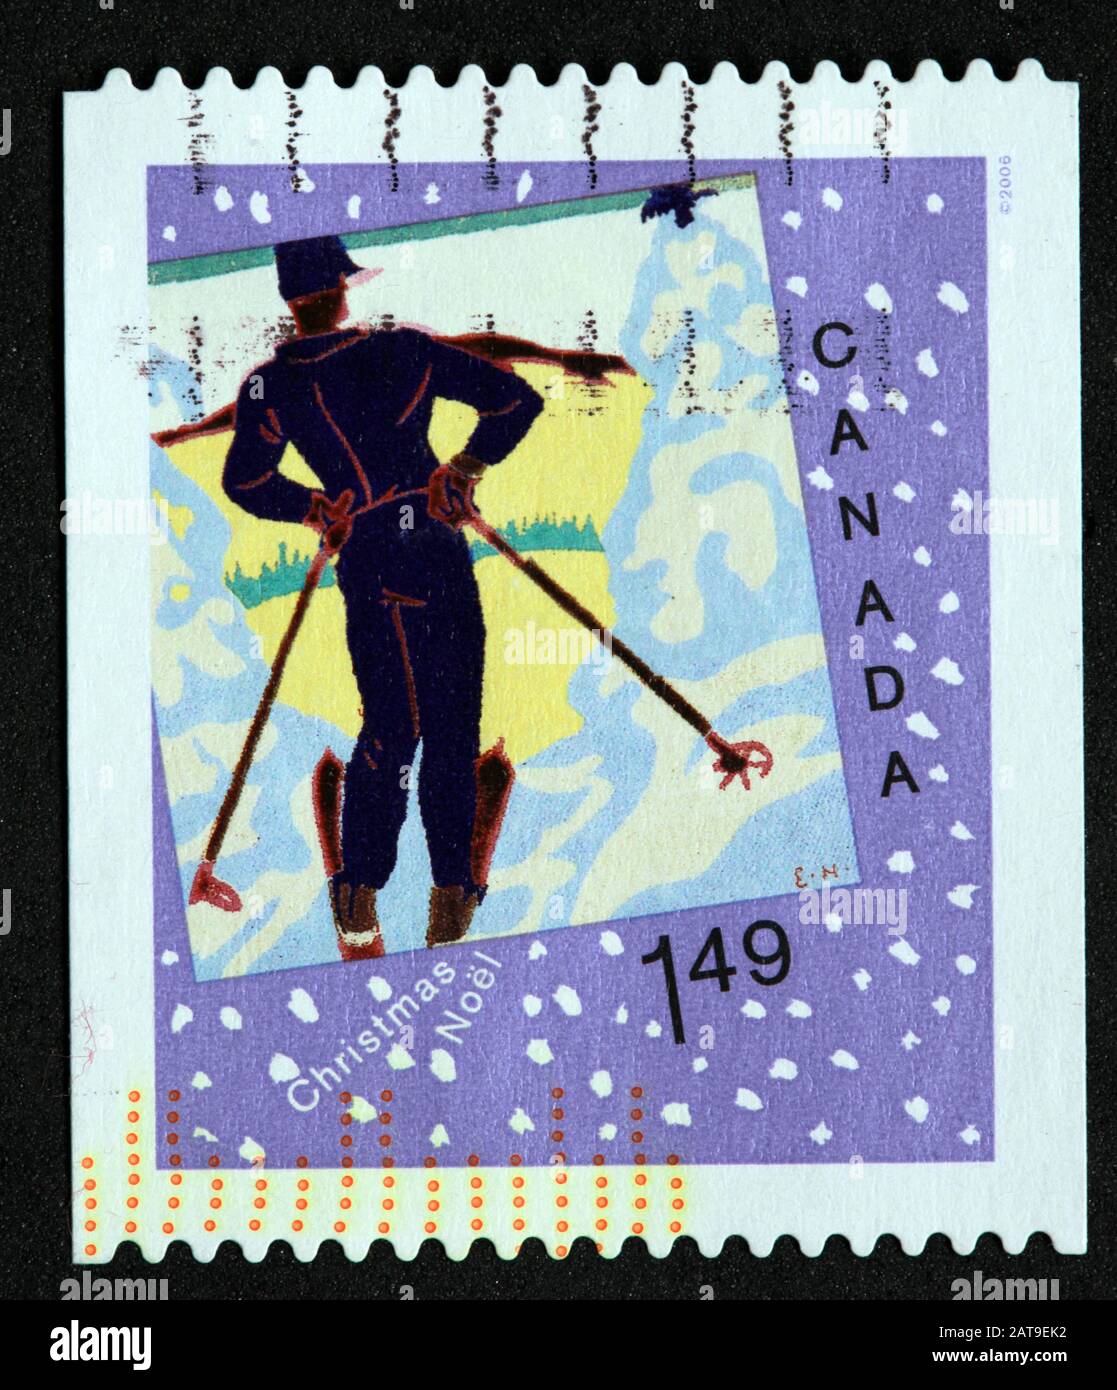 Canadian Stamp, Canada Stamp, Canada Post,used stamp, 1.49, $1.49 , Christmas, Noel,stamp,frank,franked , skier,ski Stock Photo